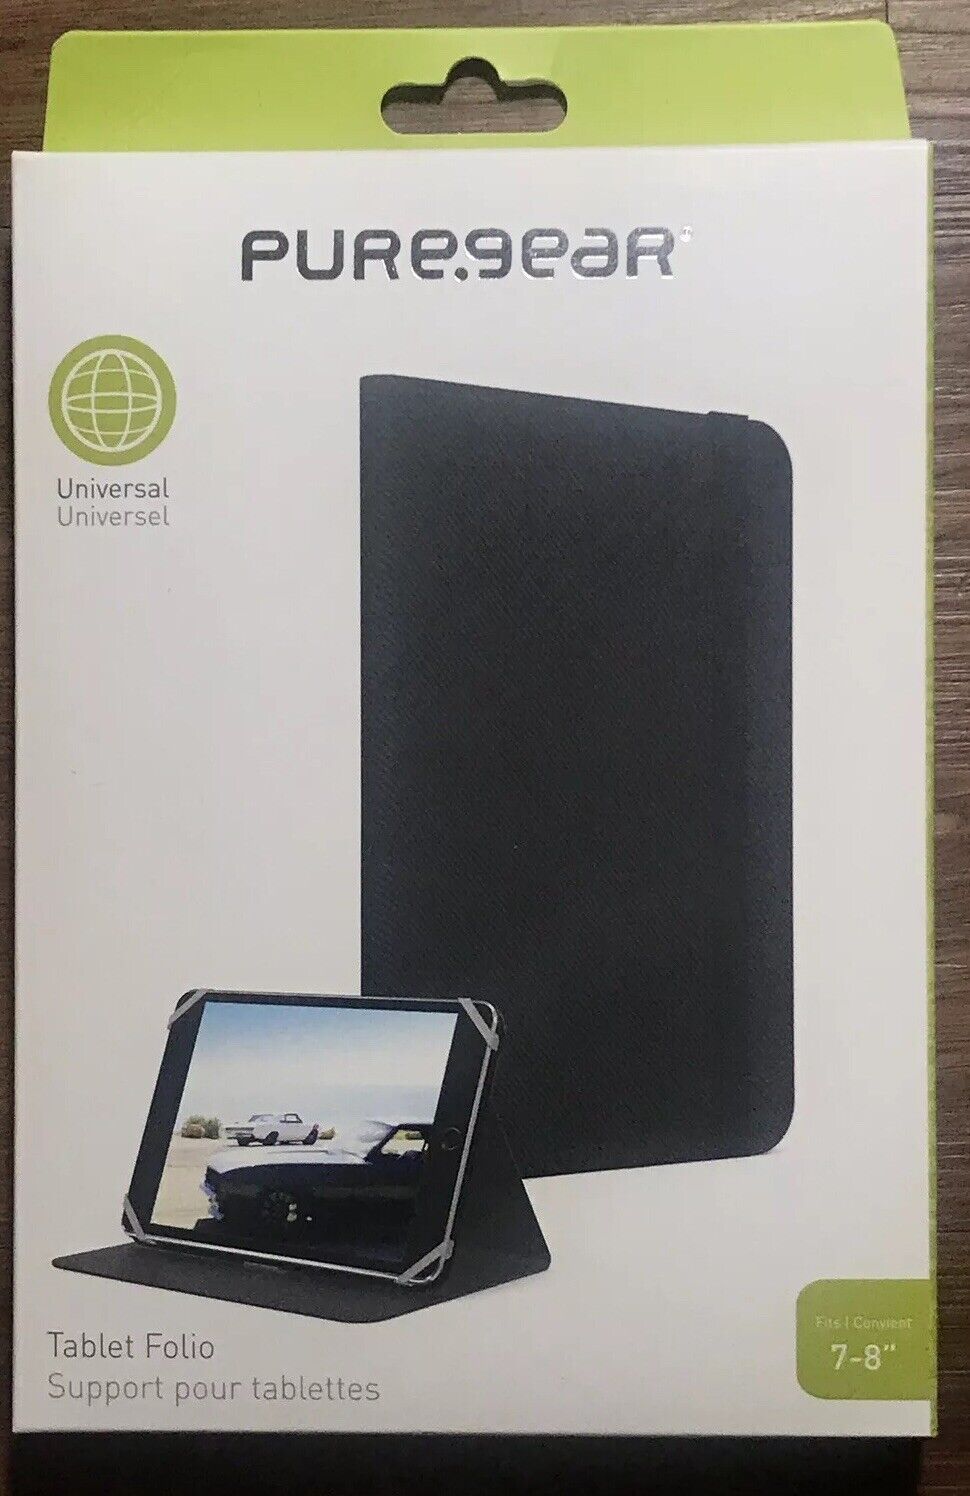 PureGear Universal Tablet Folio Cover Case for 7-8" Tablets - Black